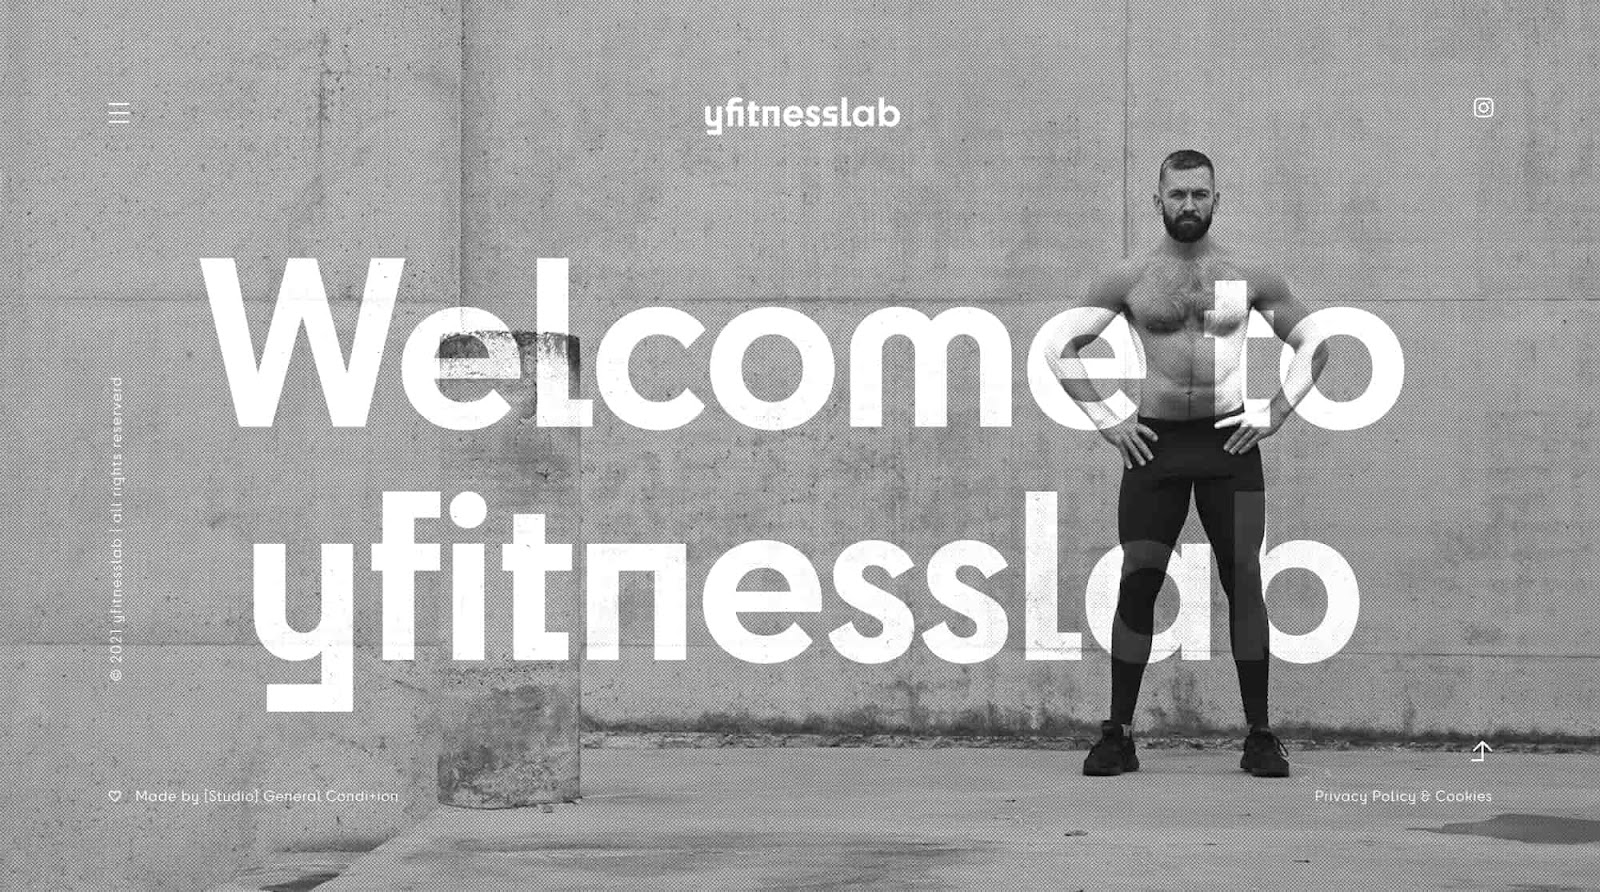 Fitness Website ytfitnesslabIMG Name: ytfitnesslab.png